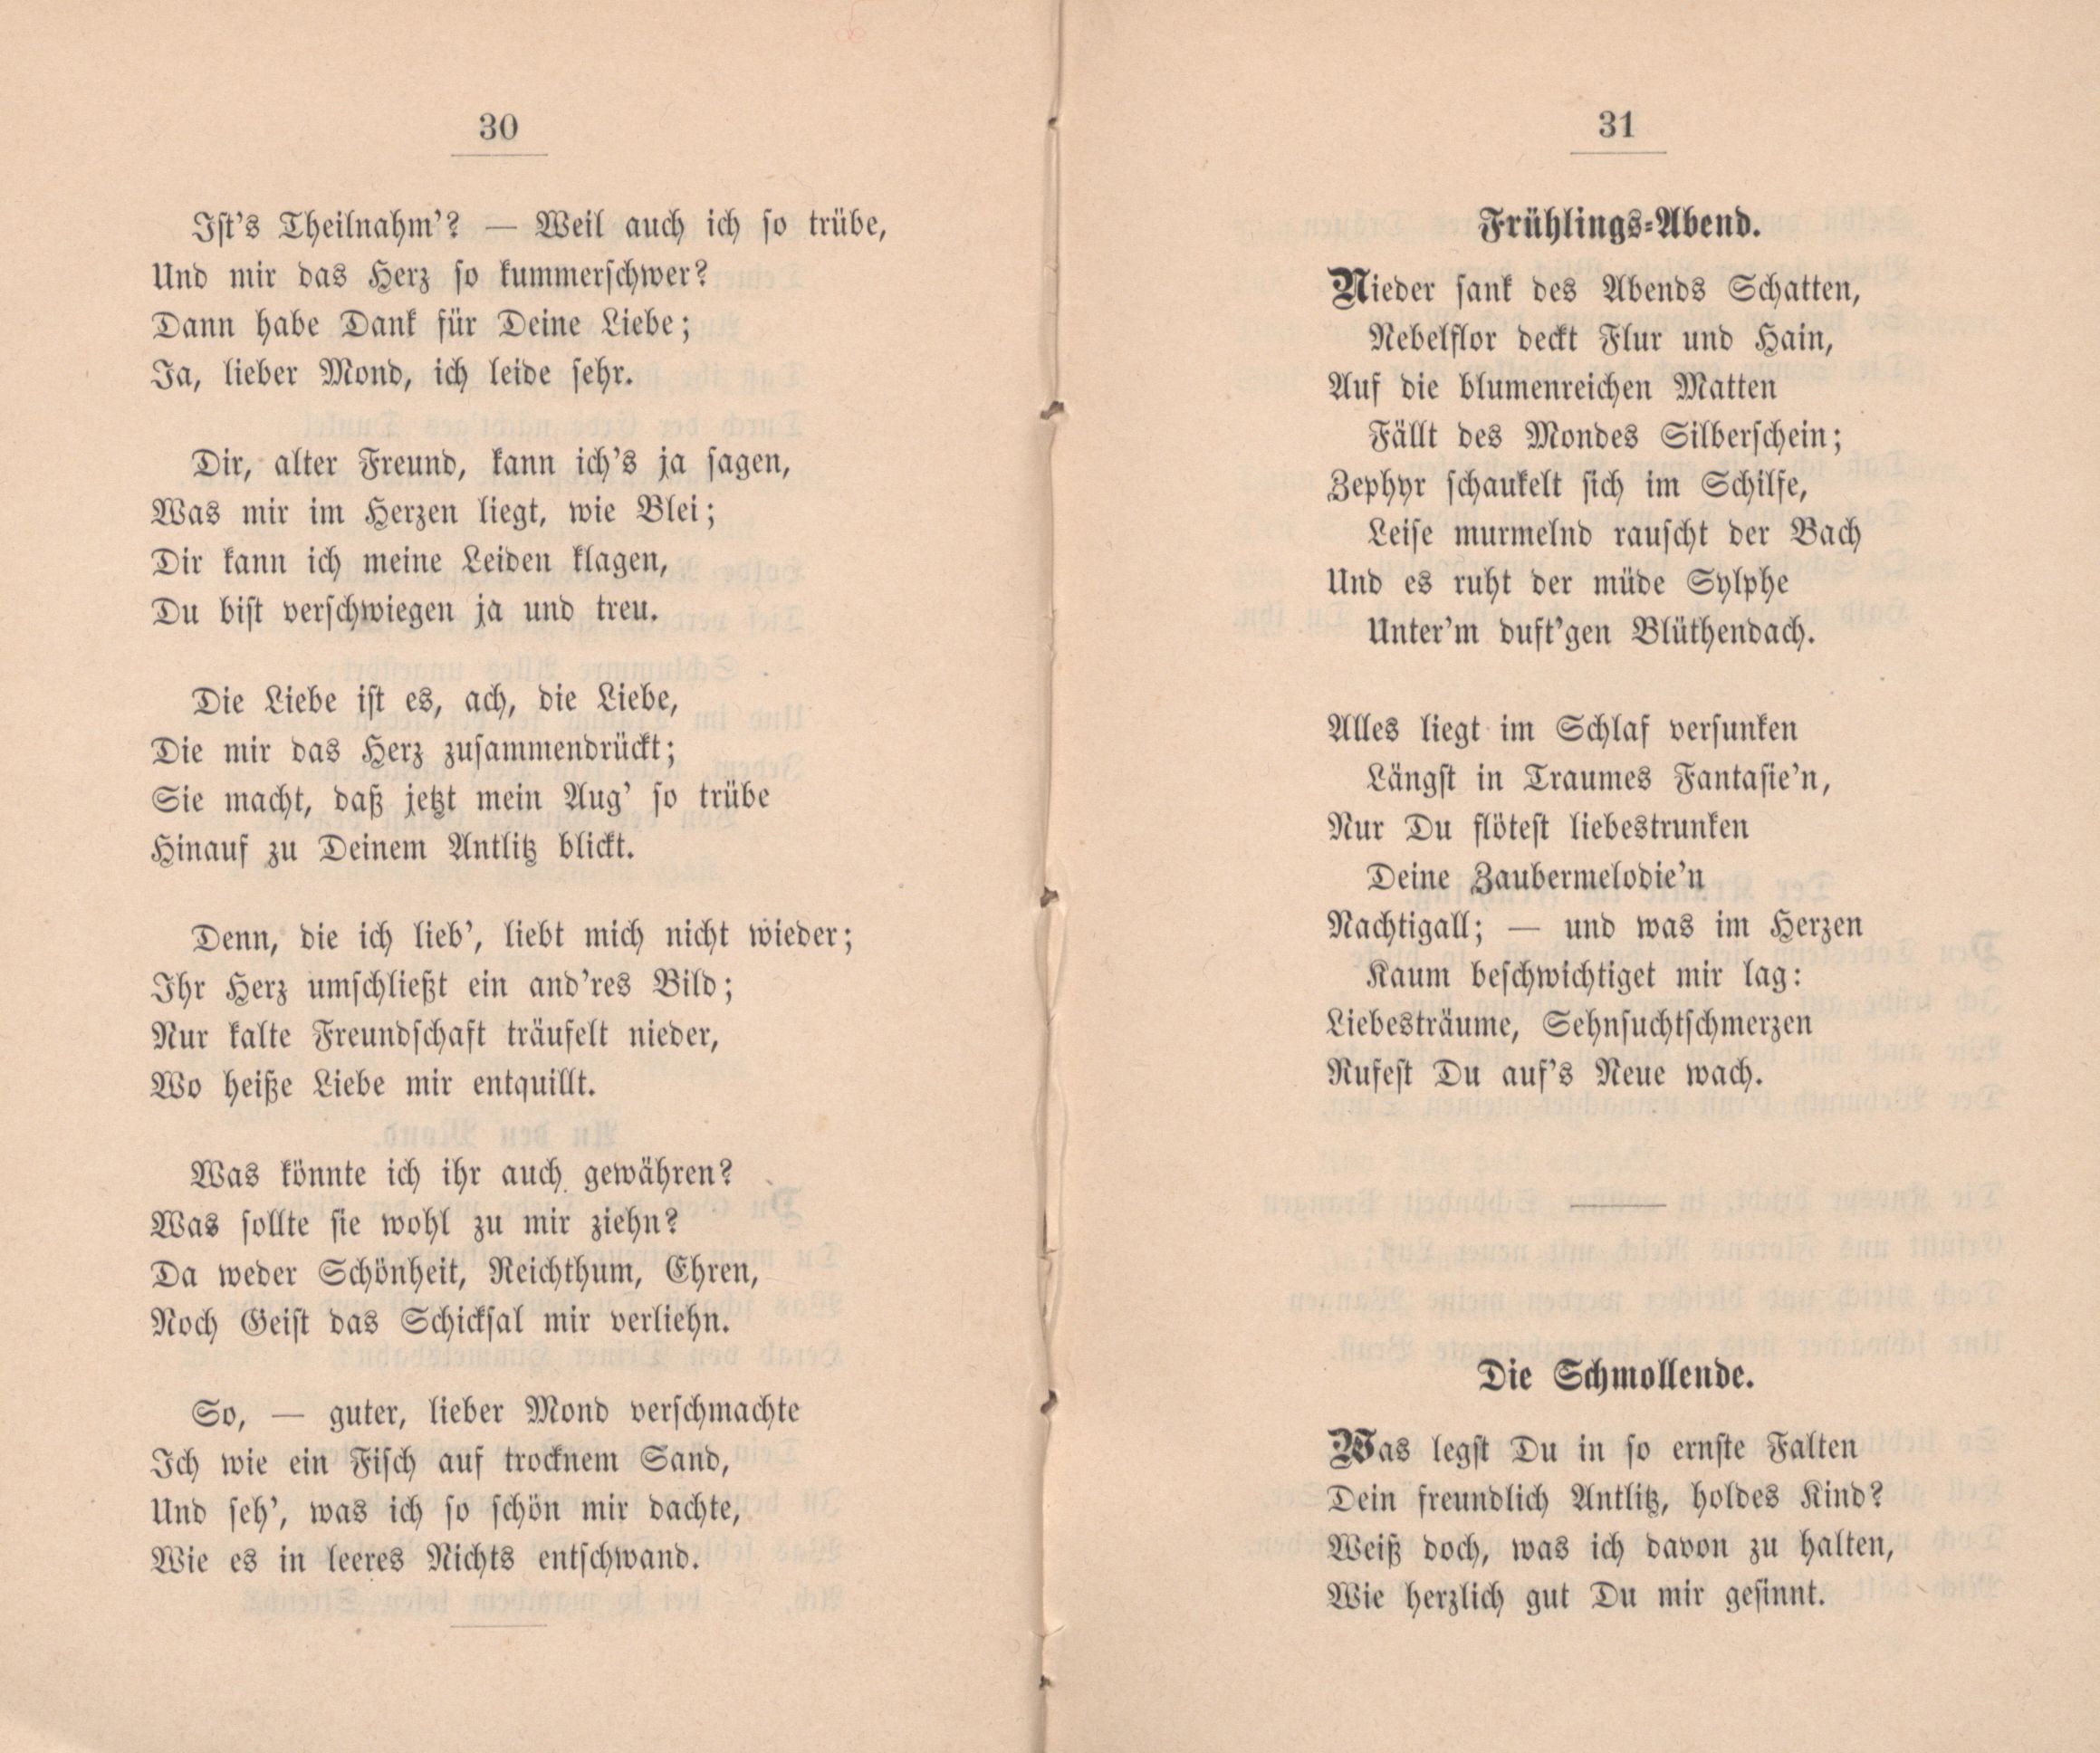 Die Schmollende (1878) | 1. (30-31) Основной текст